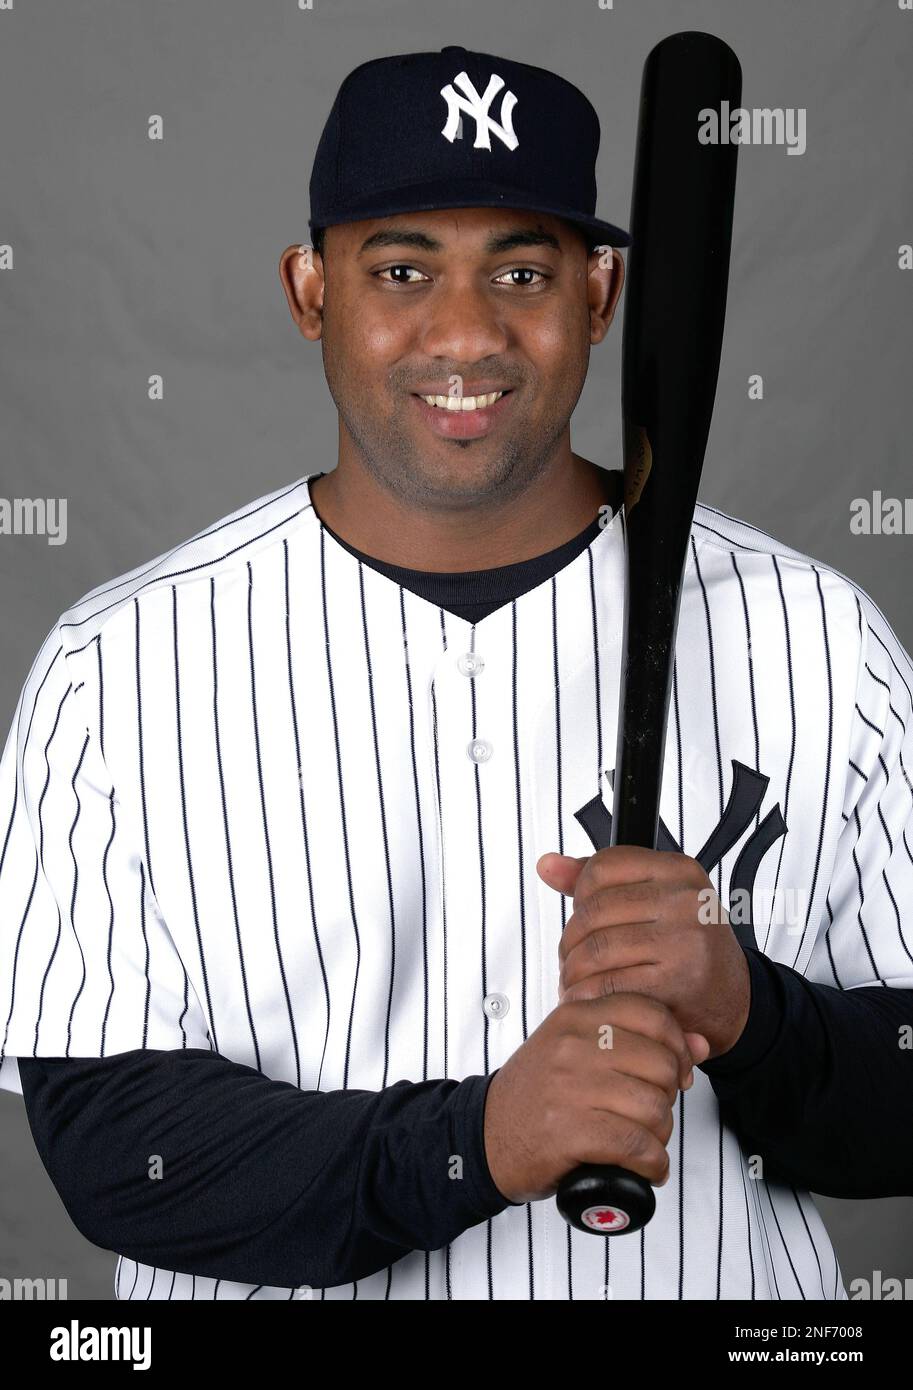 This is a 2009 photo of Juan Miranda of the New York Yankees